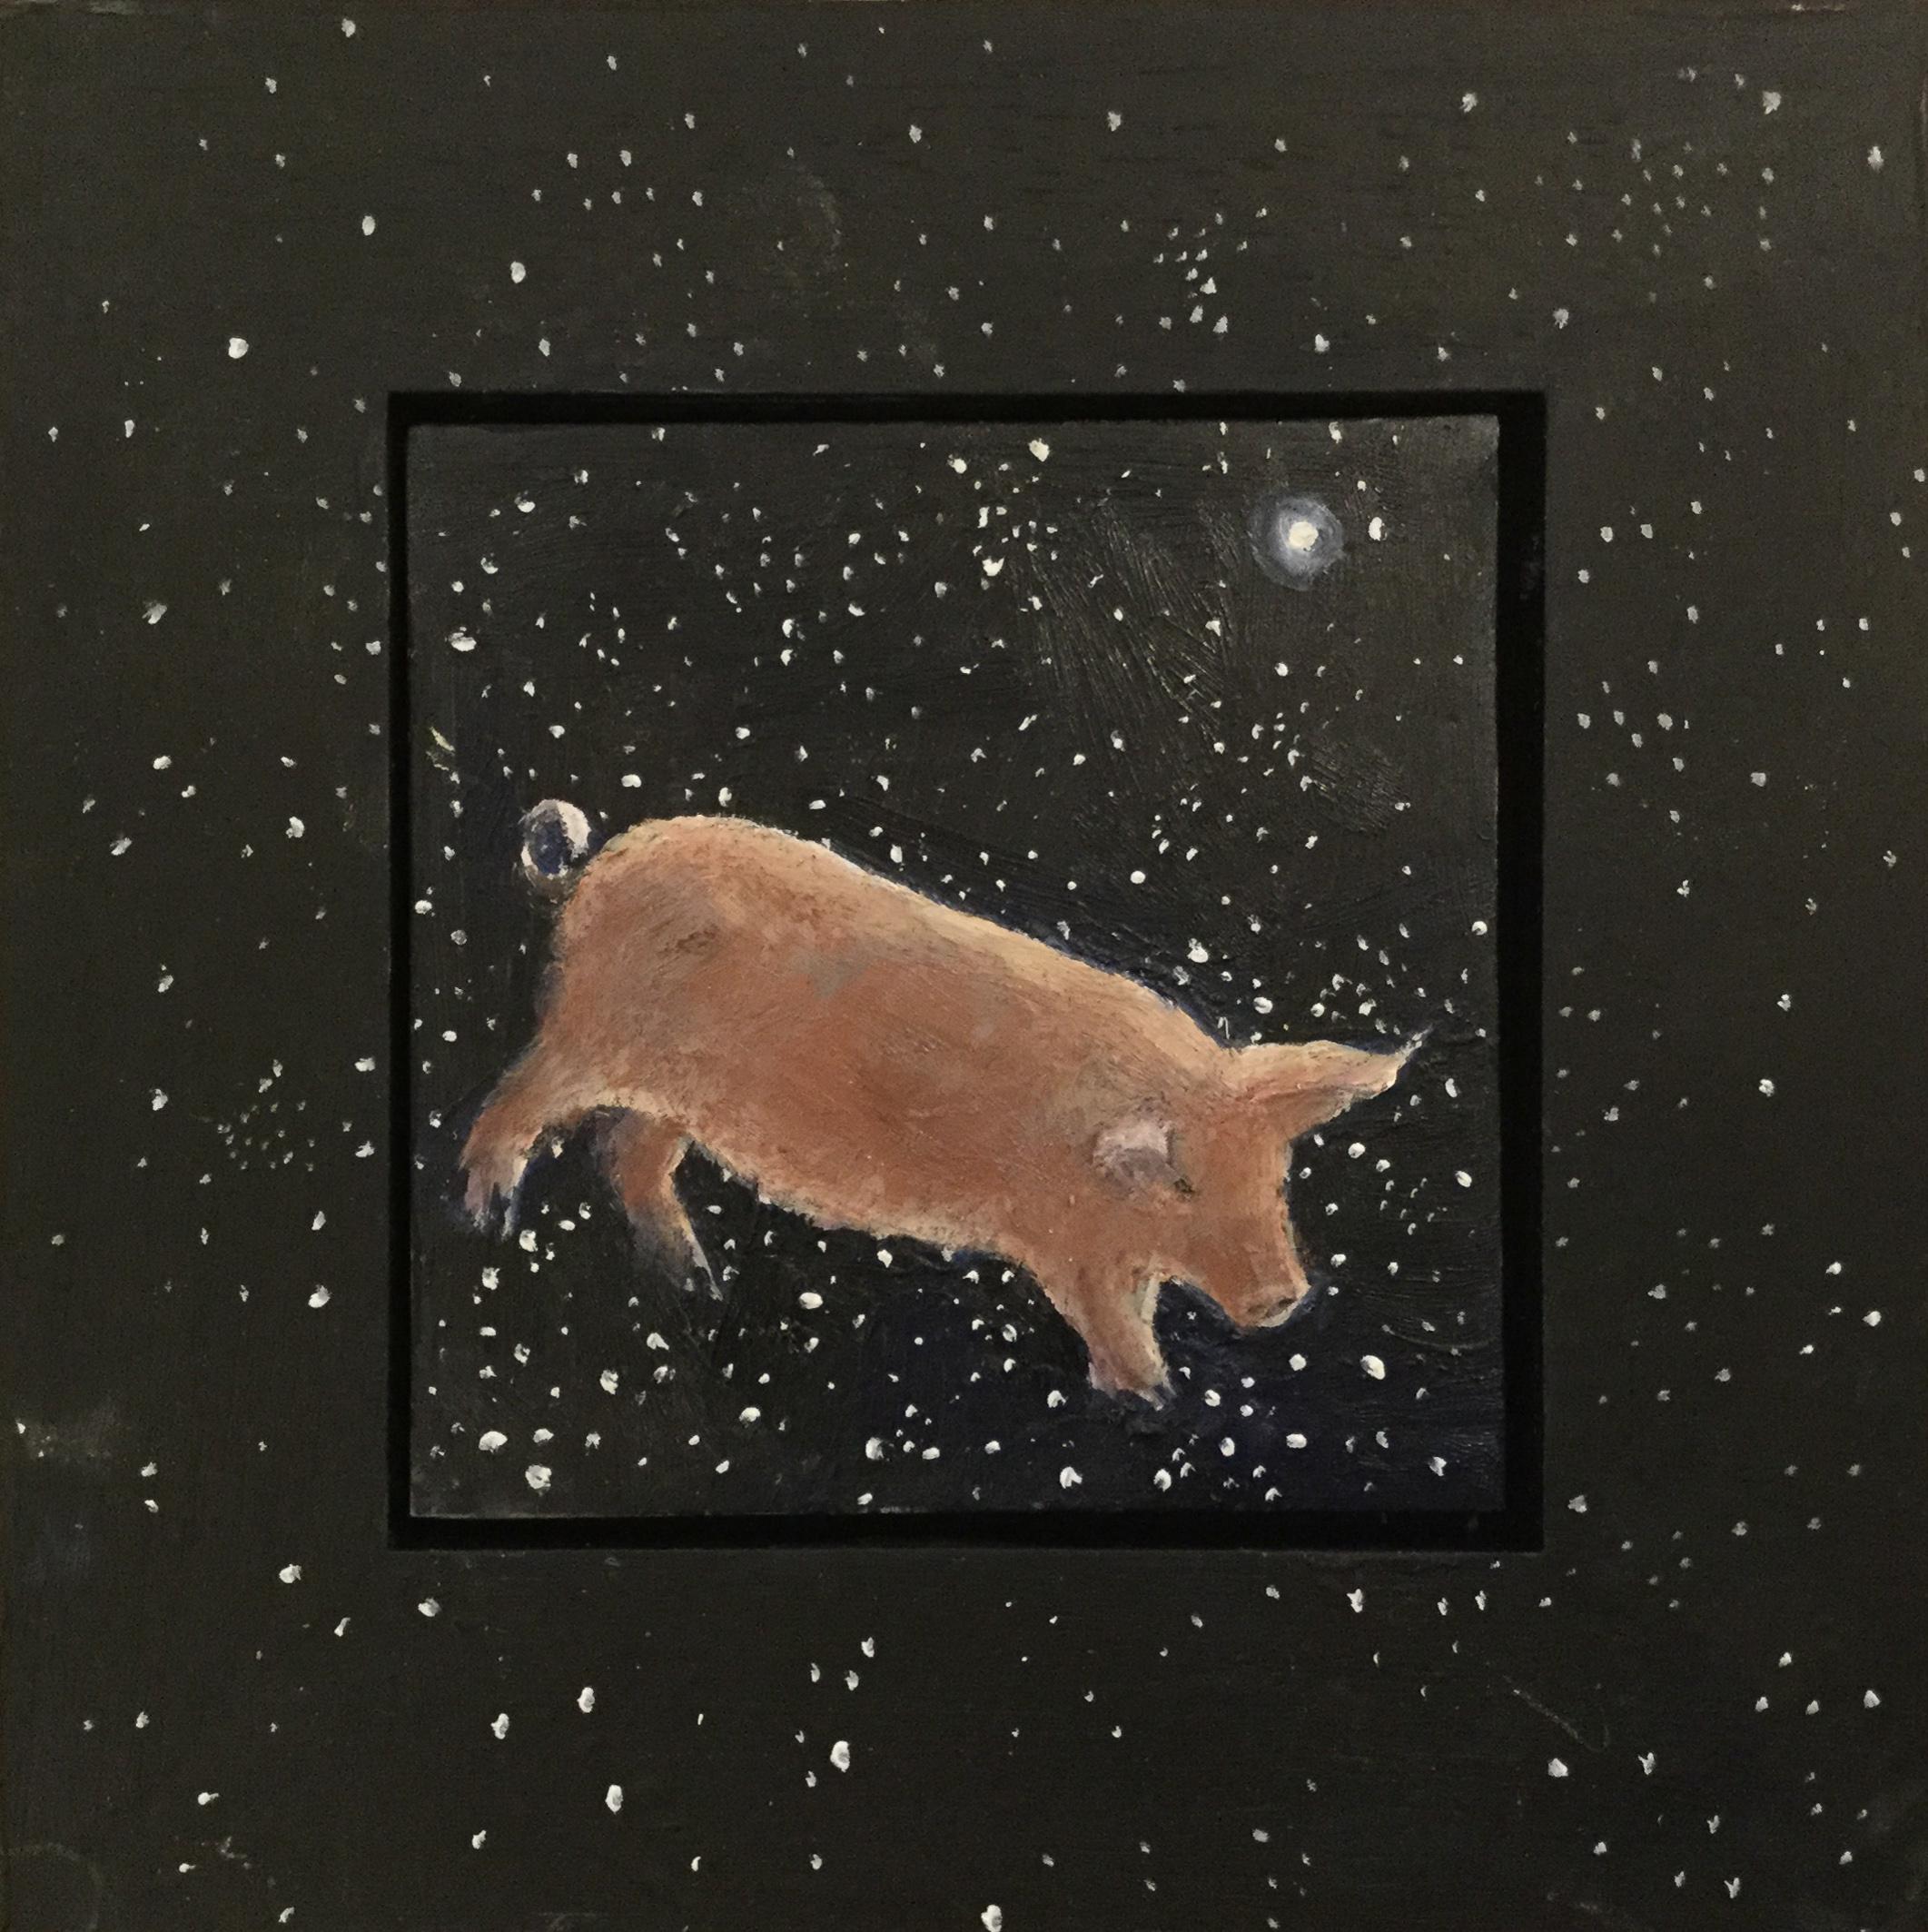 Pig in space